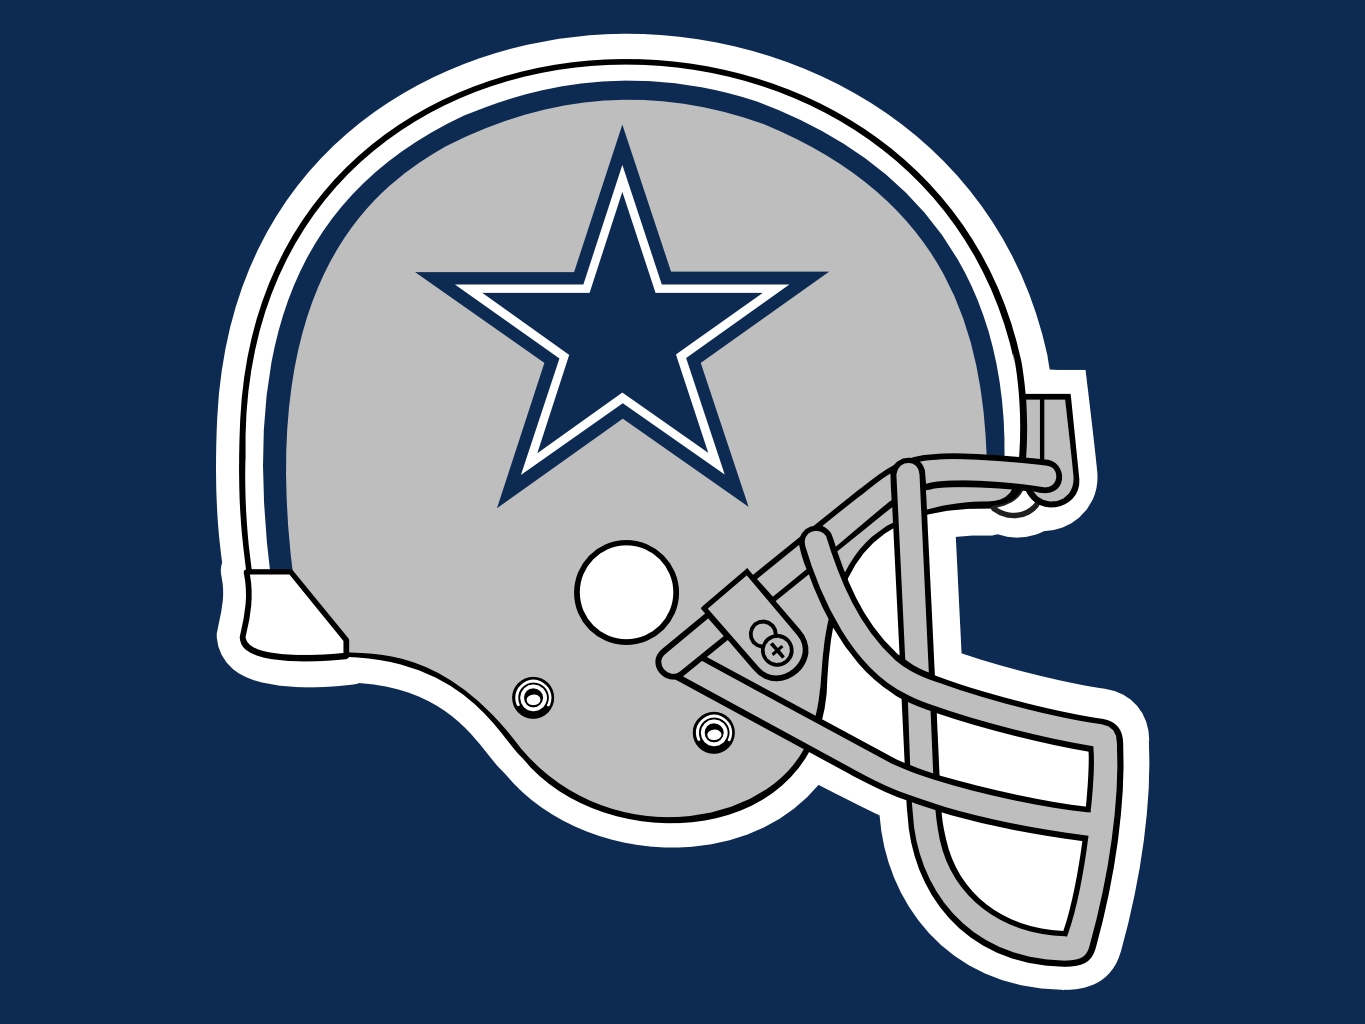 Dallas Cowboys Logos and Wallpapers WallpaperSafari